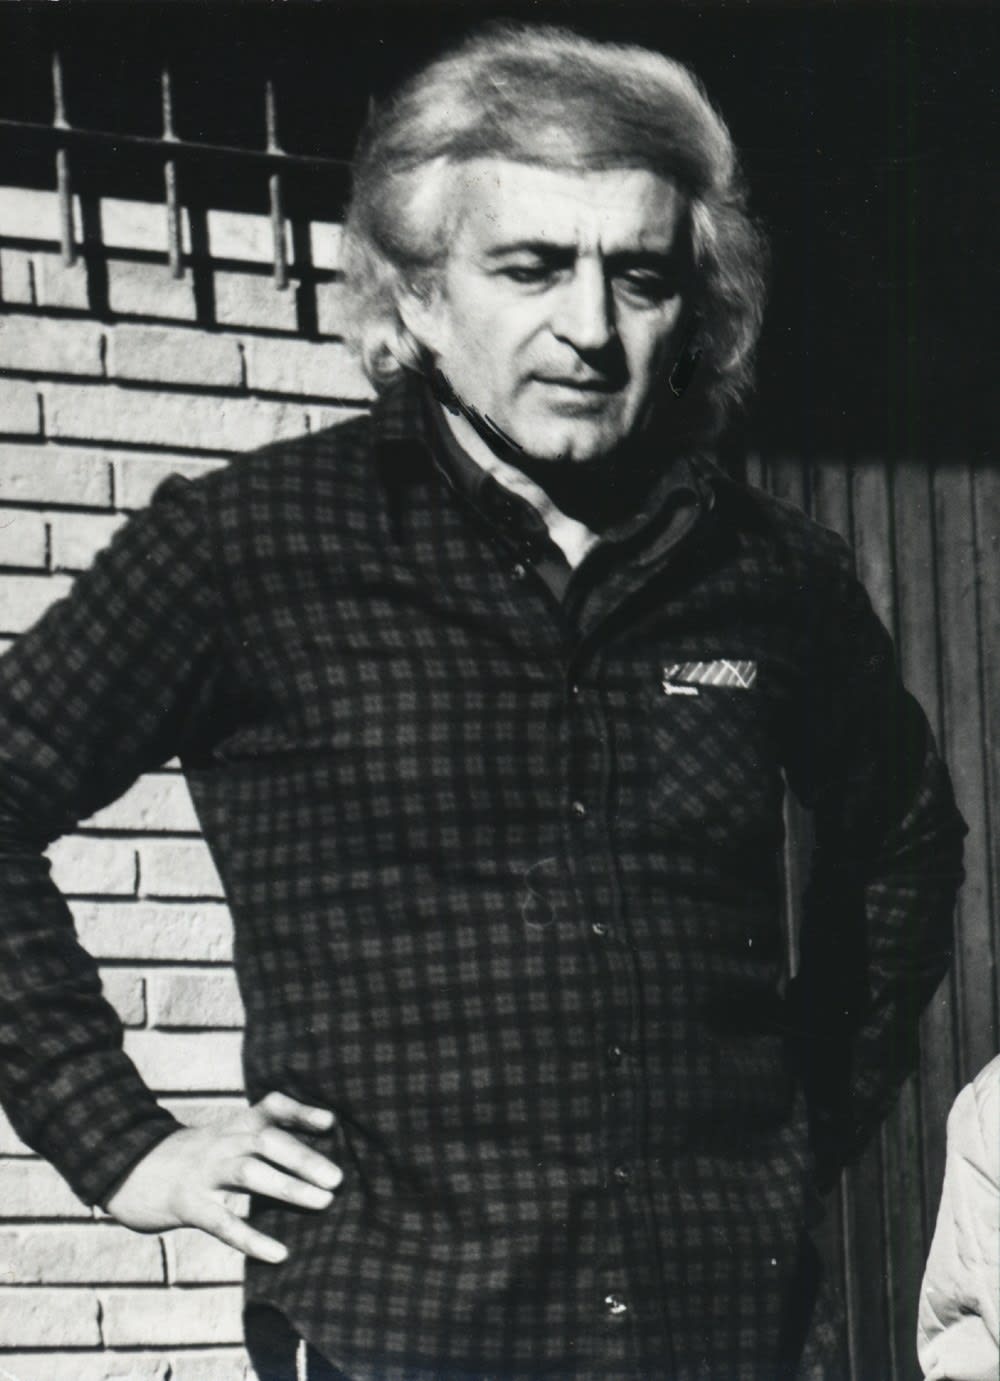 Mario Giacomelli, Portrait of Mario Giacomelli, 1974